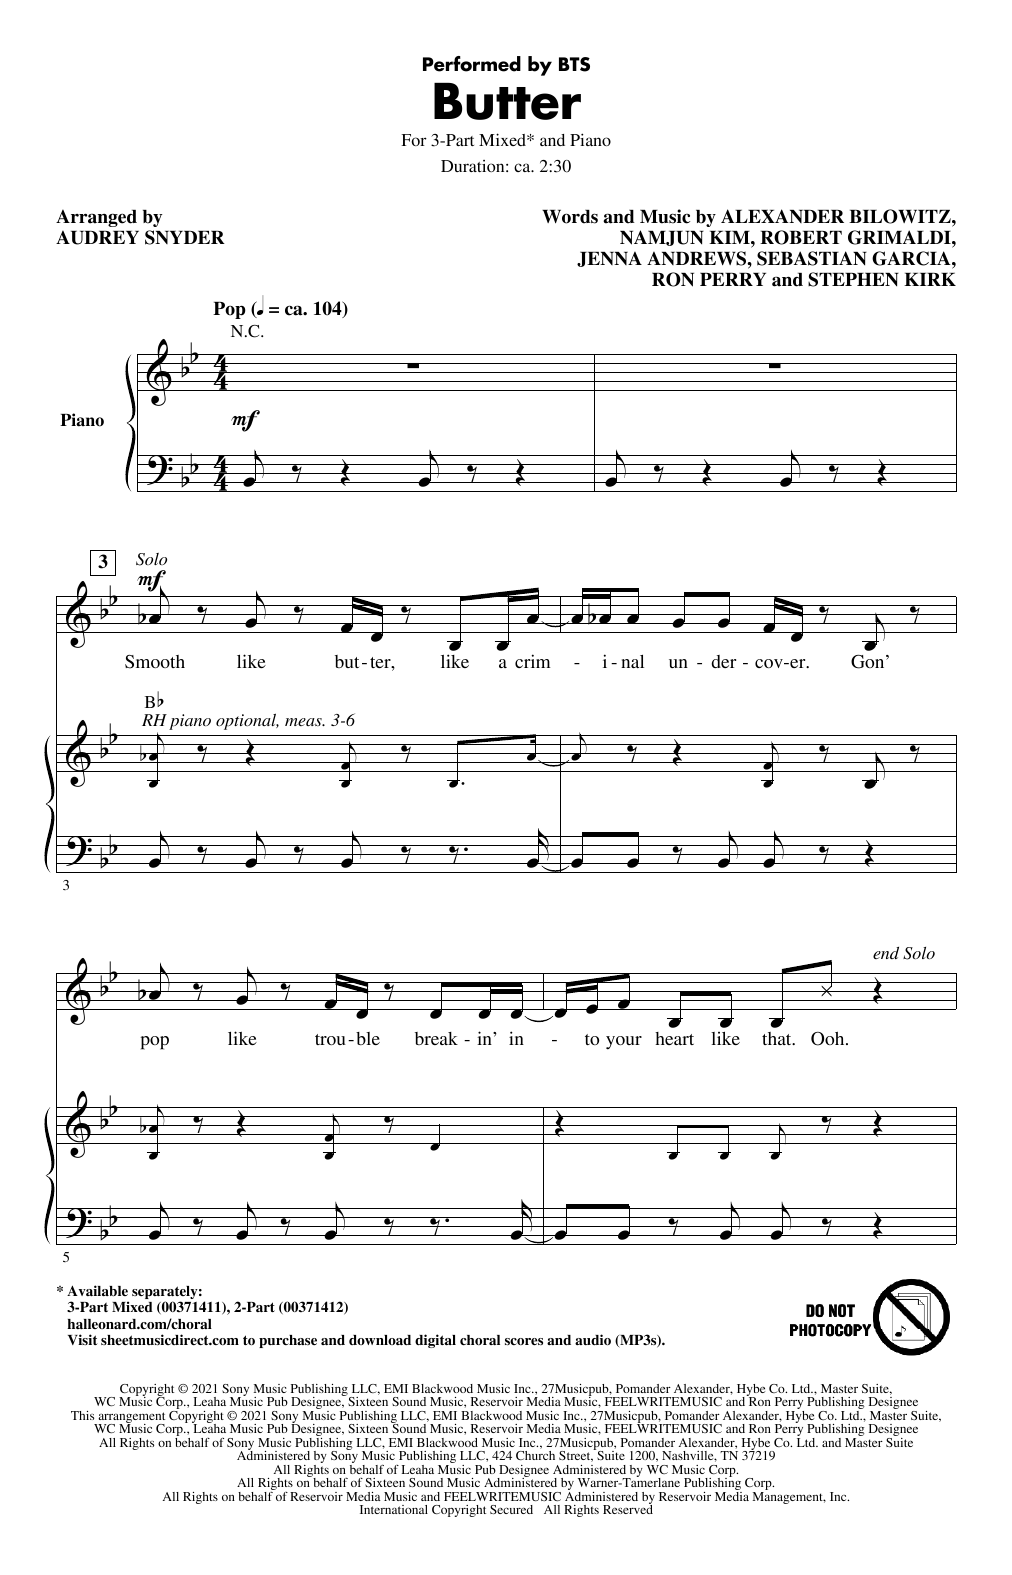 BTS Butter (arr. Audrey Snyder) Sheet Music Notes & Chords for 2-Part Choir - Download or Print PDF